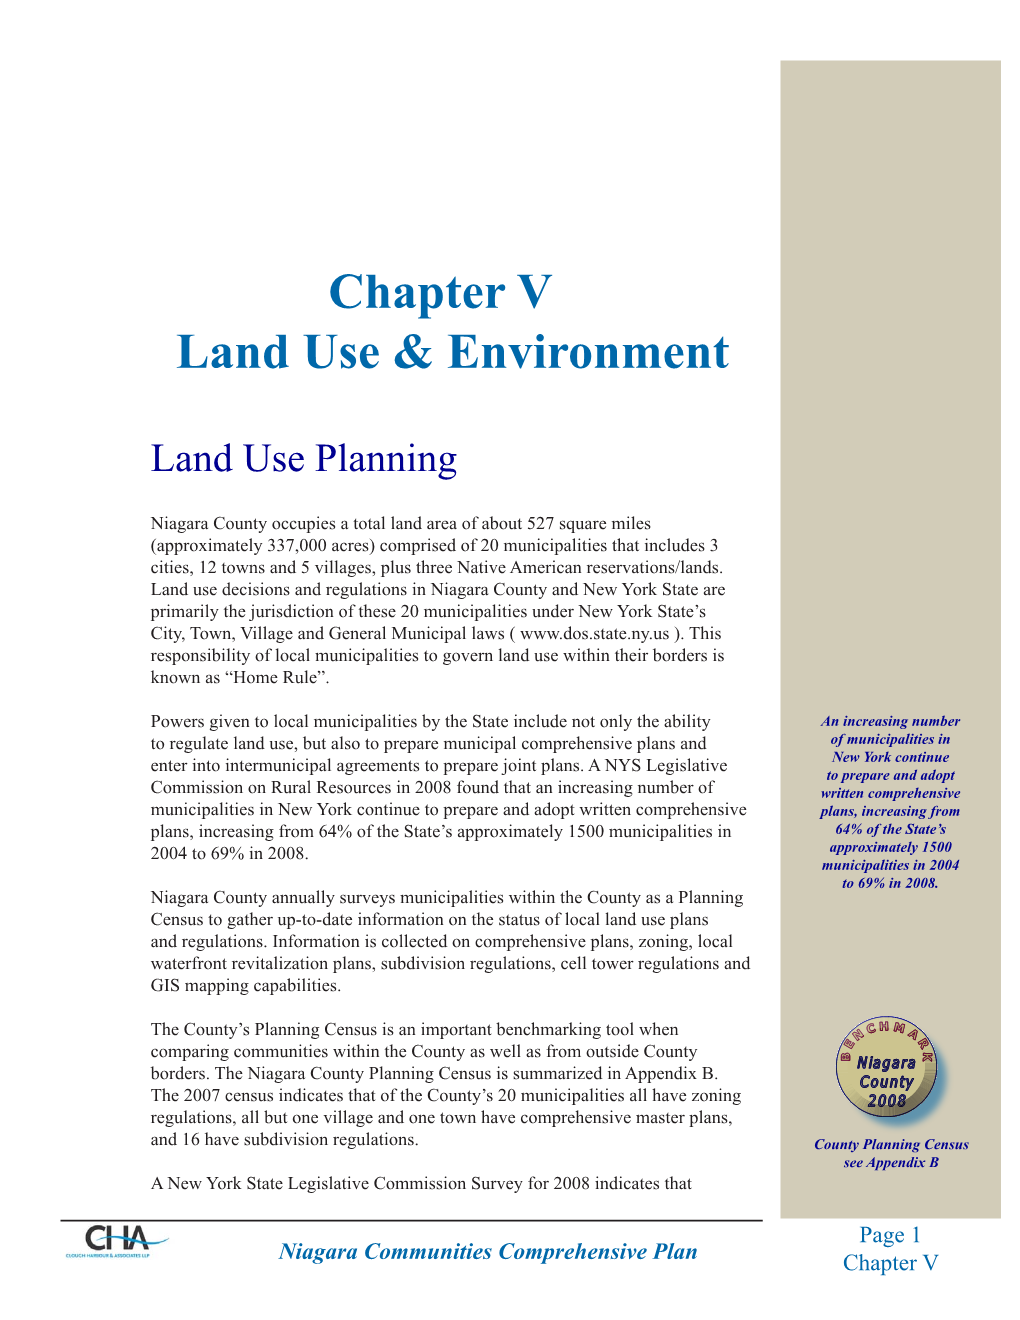 Chapter V Land Use & Environment